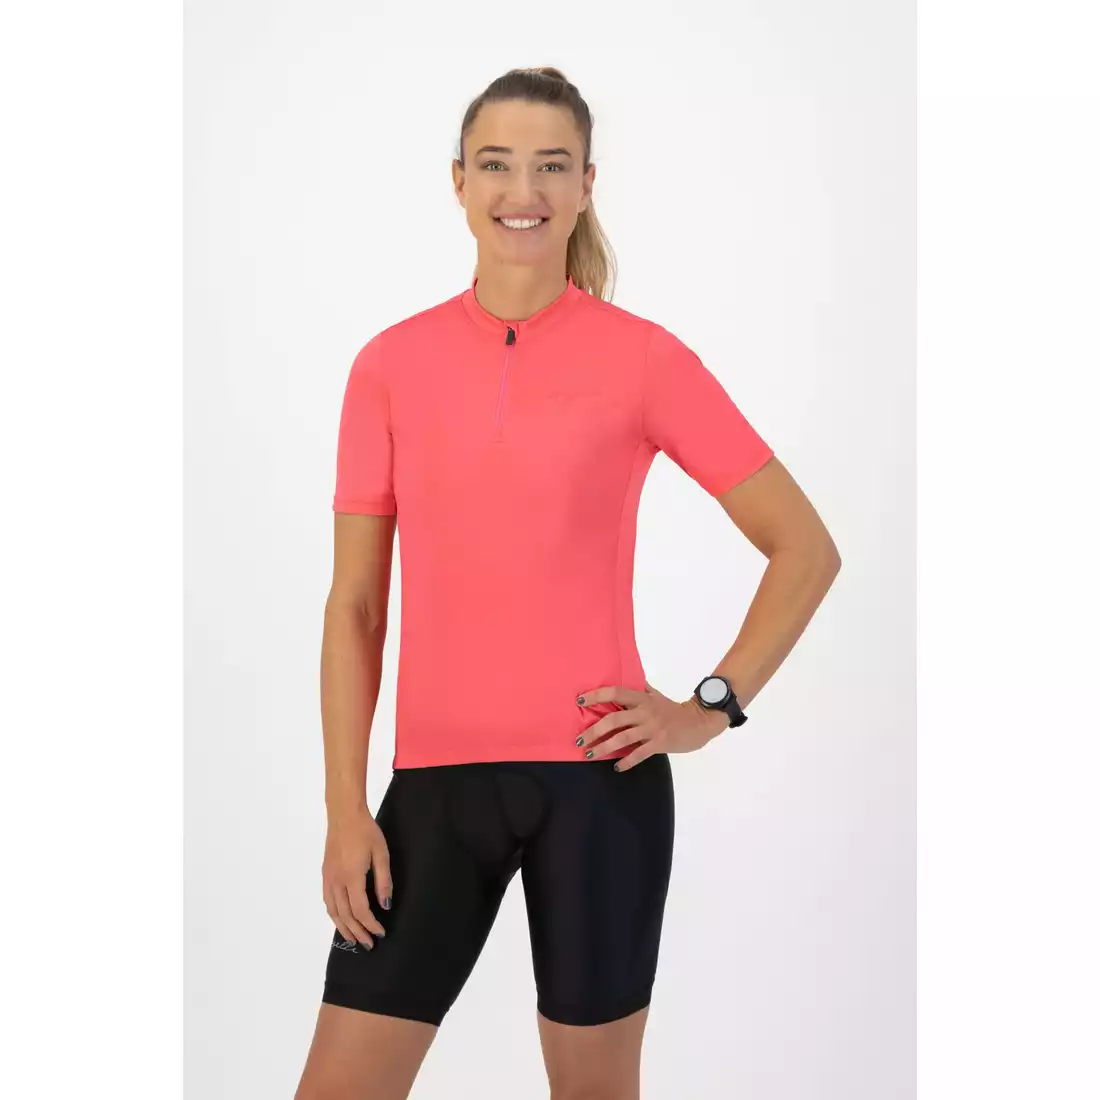 Rogelli CORE women's cycling jersey, pink